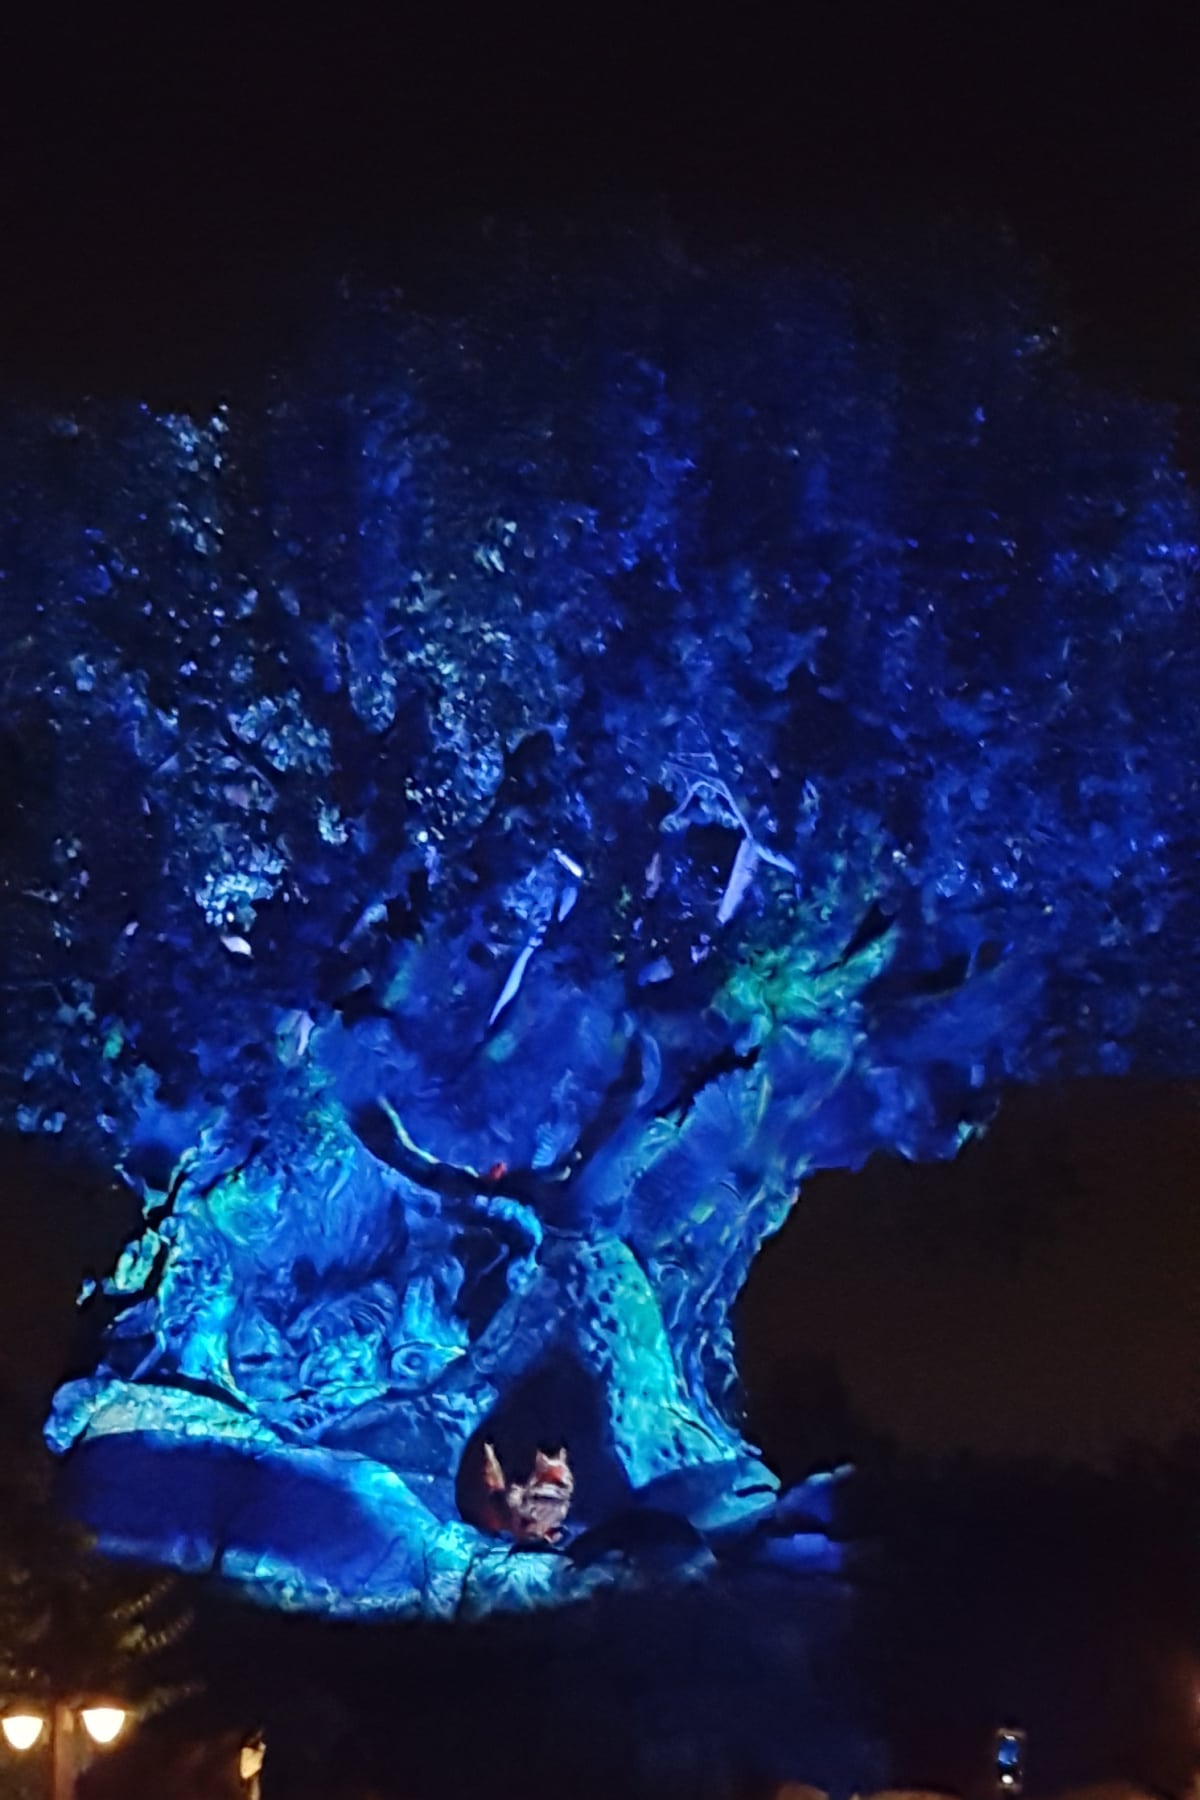 Tree Of Lifelit up at night